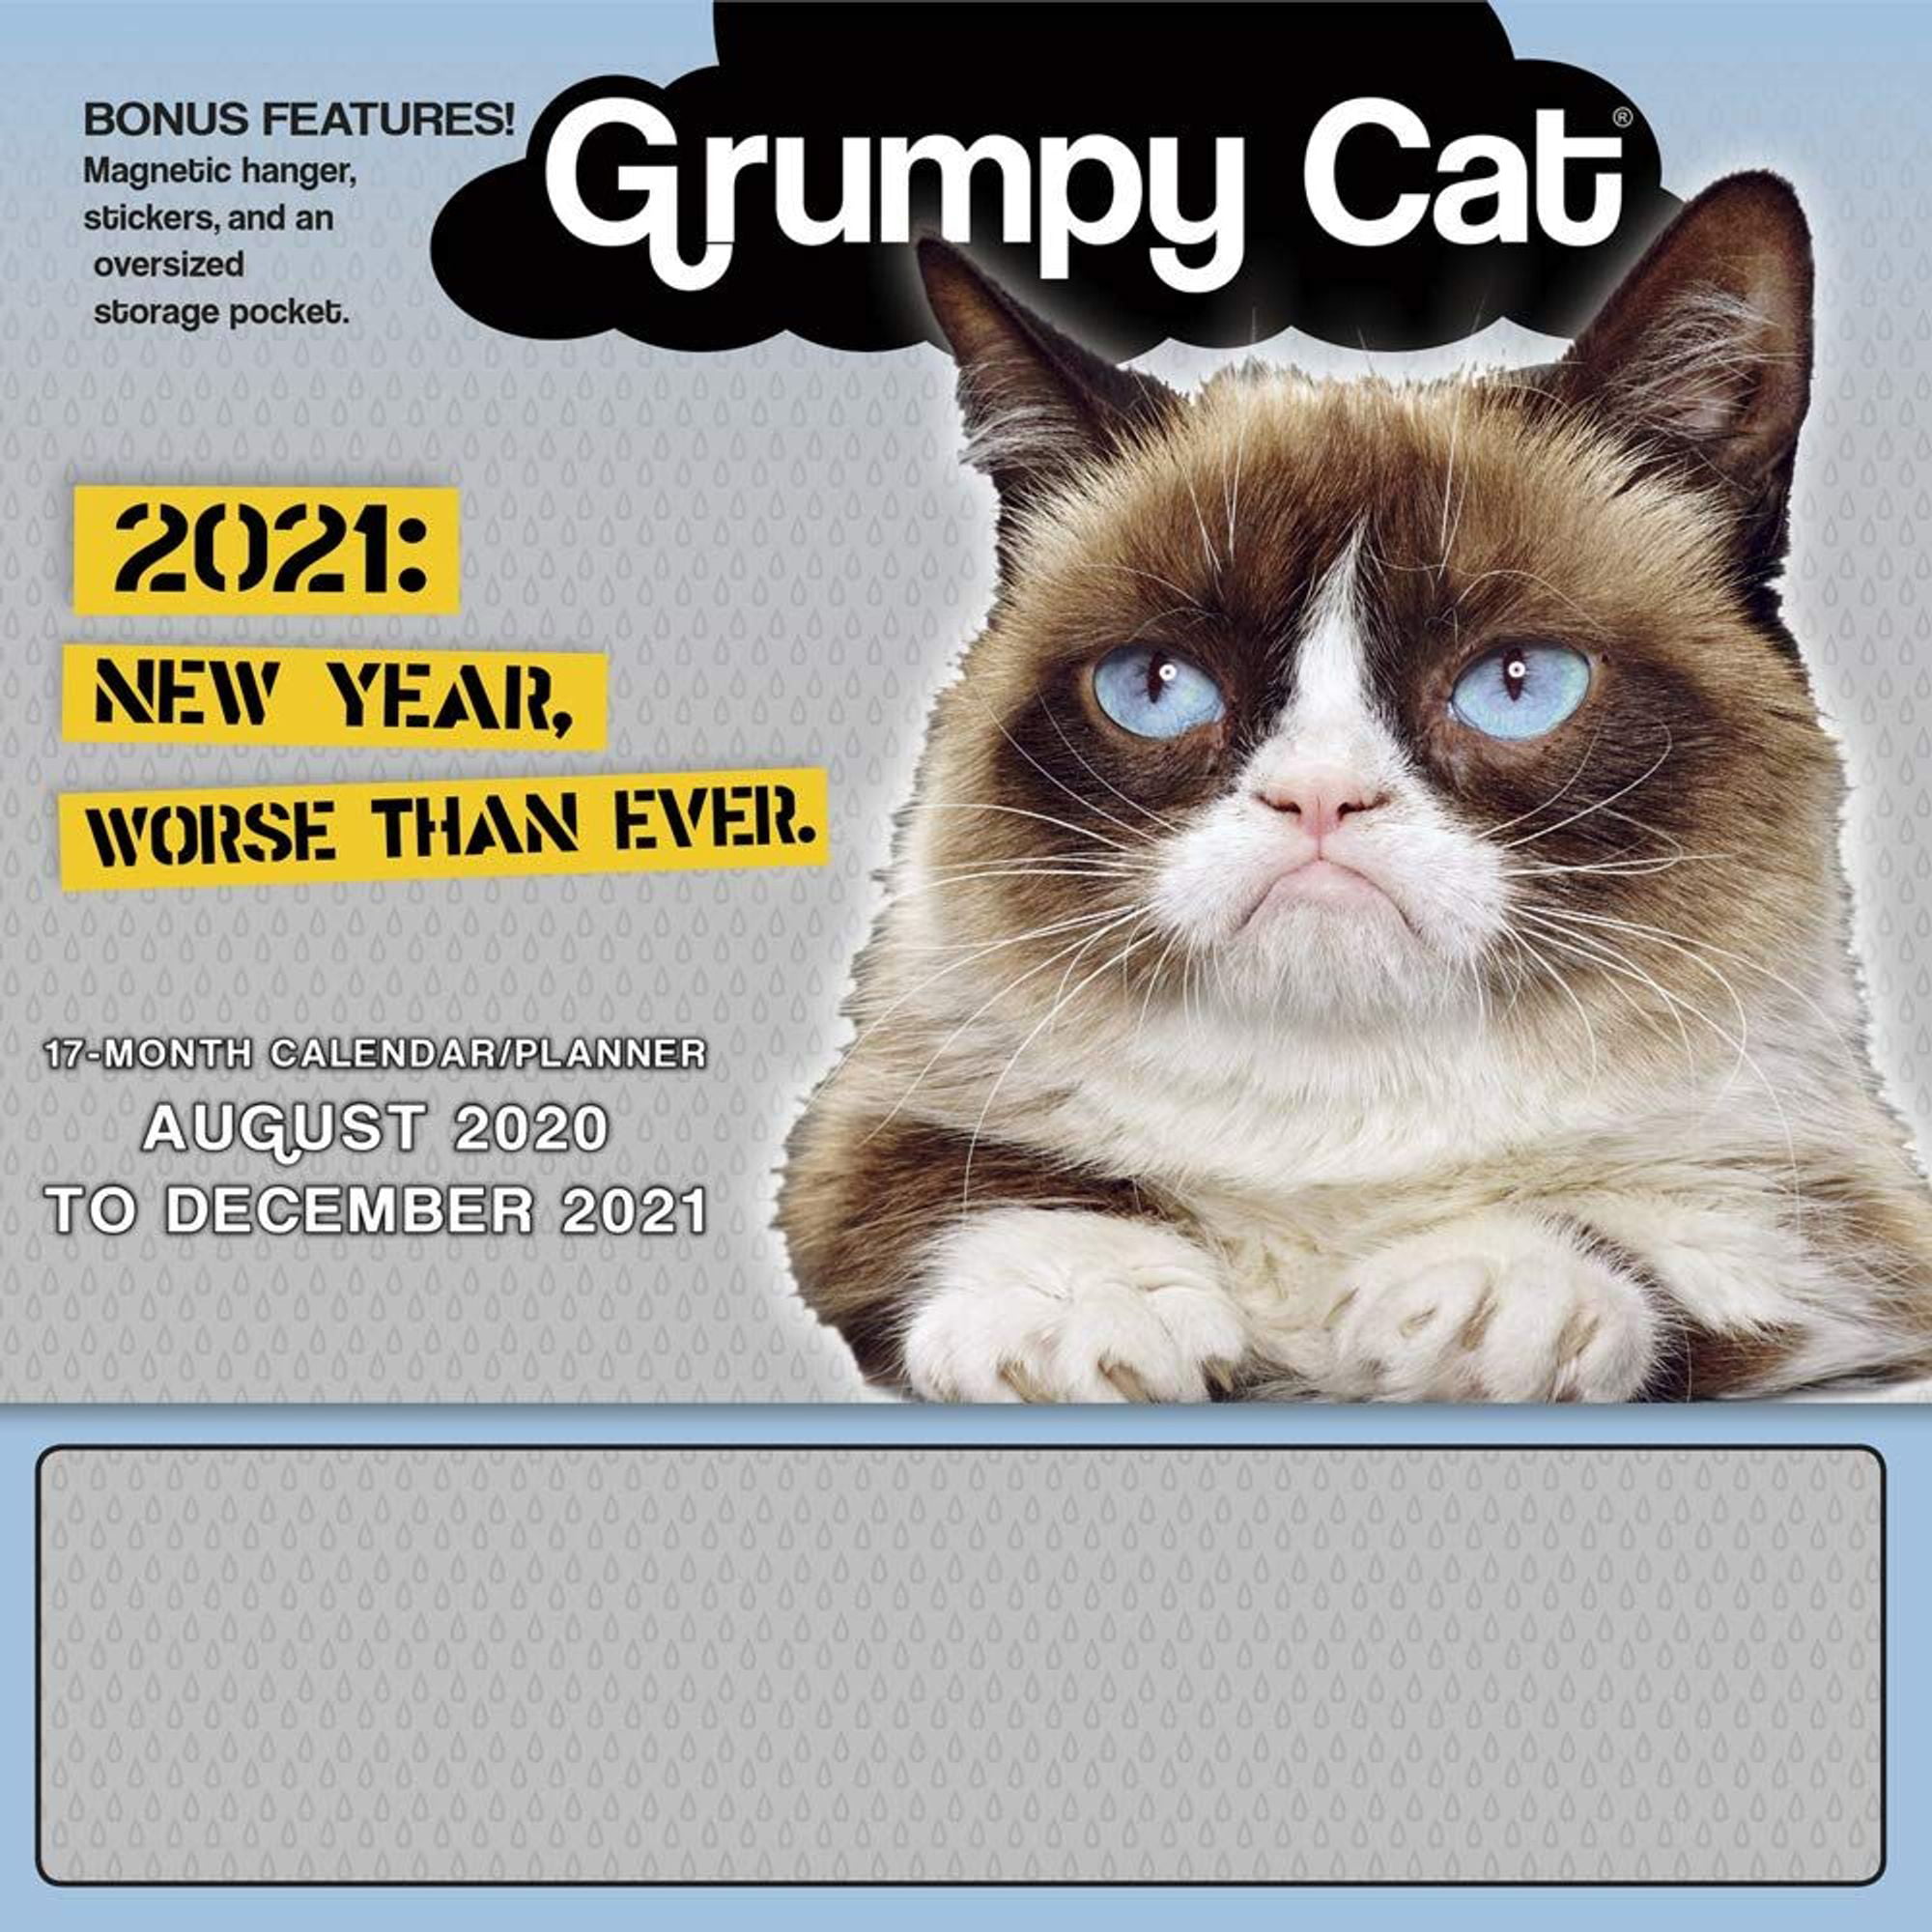 2021-grumpy-cat-17-month-monthly-wall-calendar-planner-by-grumpy-cat